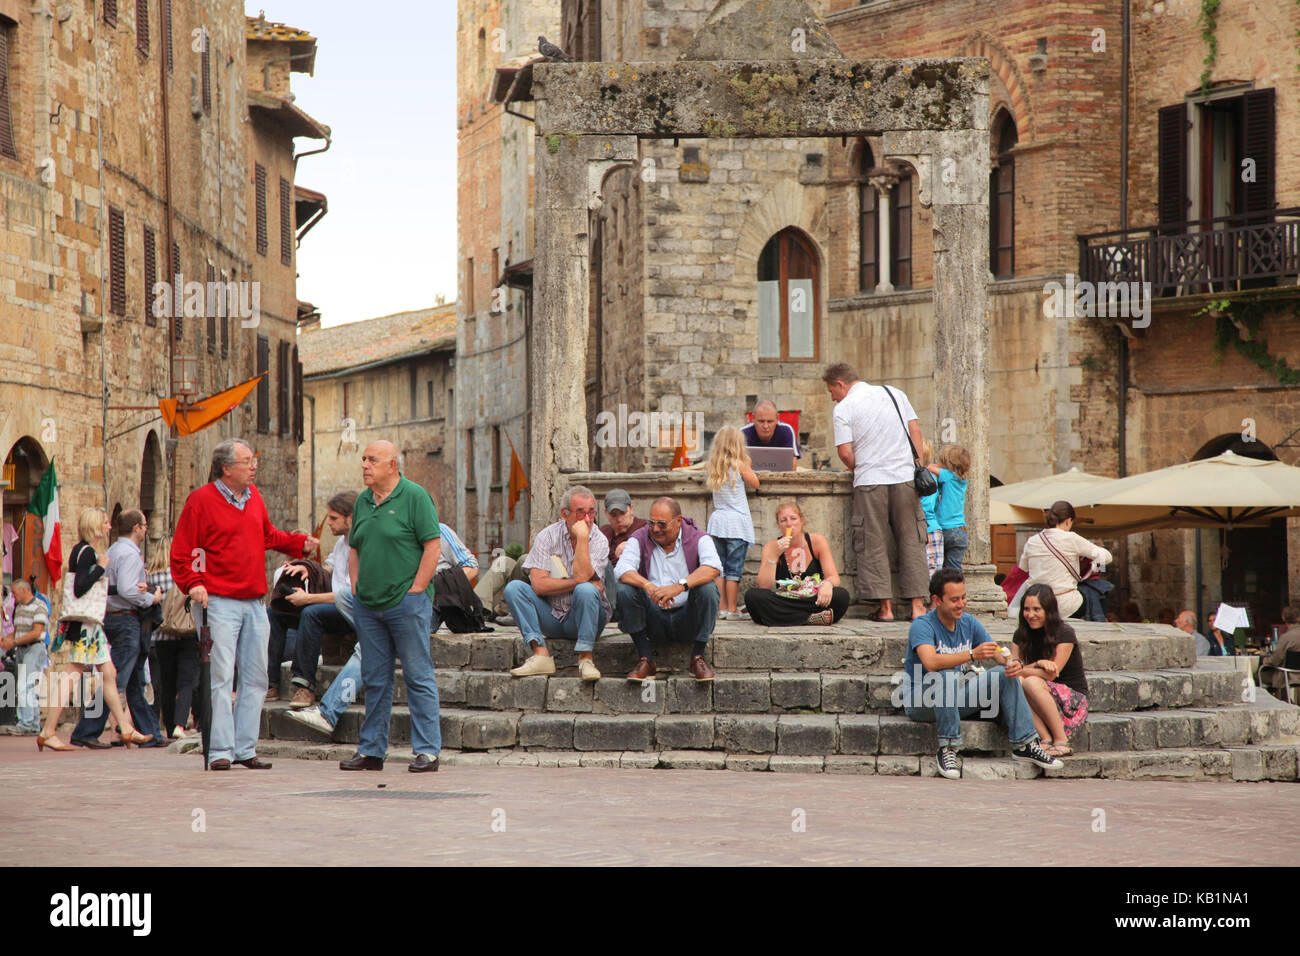 Locals sit together, San Gimignano, Tuscany, Italy, Stock Photo